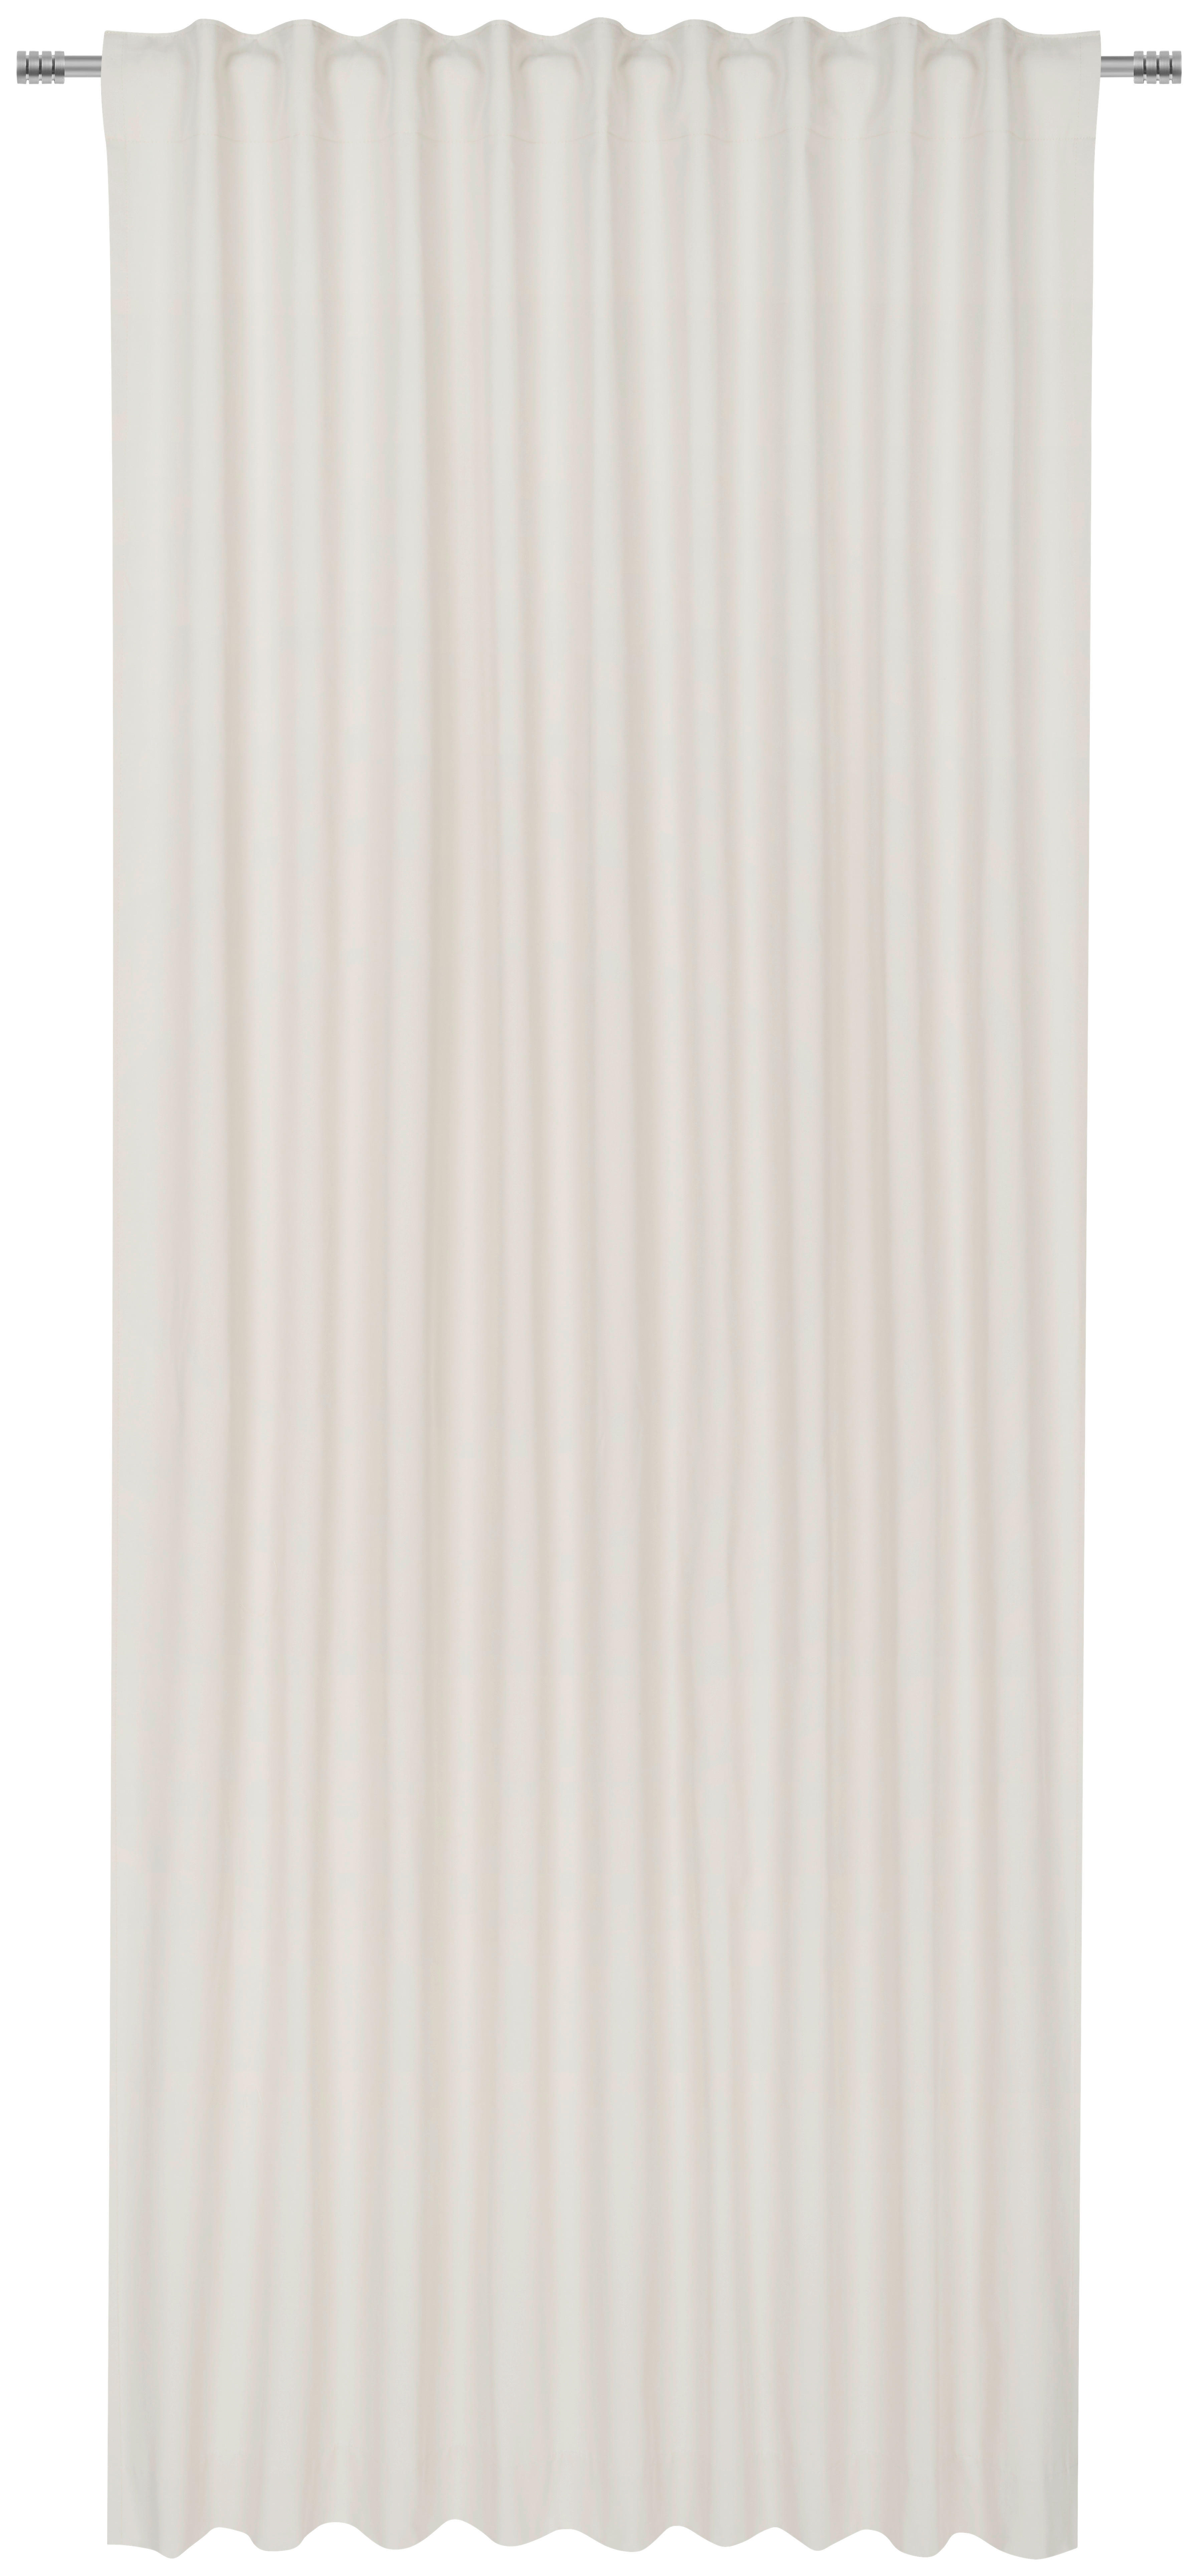 FERTIGVORHANG MERLE blickdicht 140/255 cm   - Taupe, Basics, Textil (140/255cm) - Bio:Vio